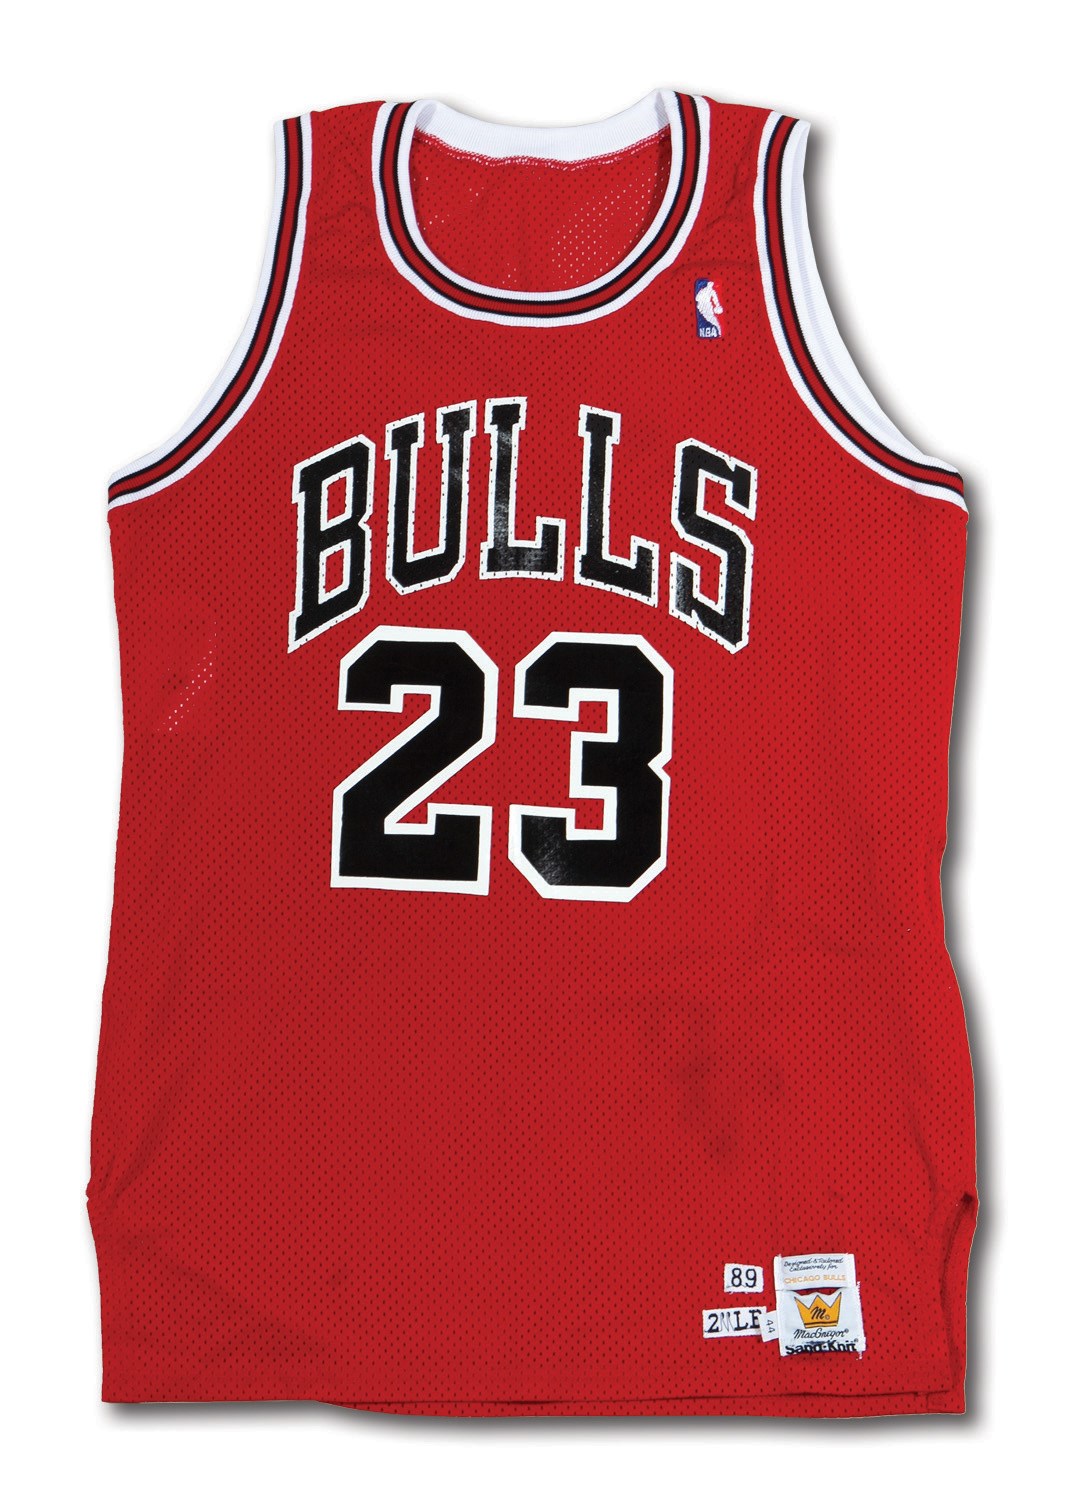 1989-90 Michael Jordan Game Worn & Signed Chicago Bulls Jersey,, Lot  #80056